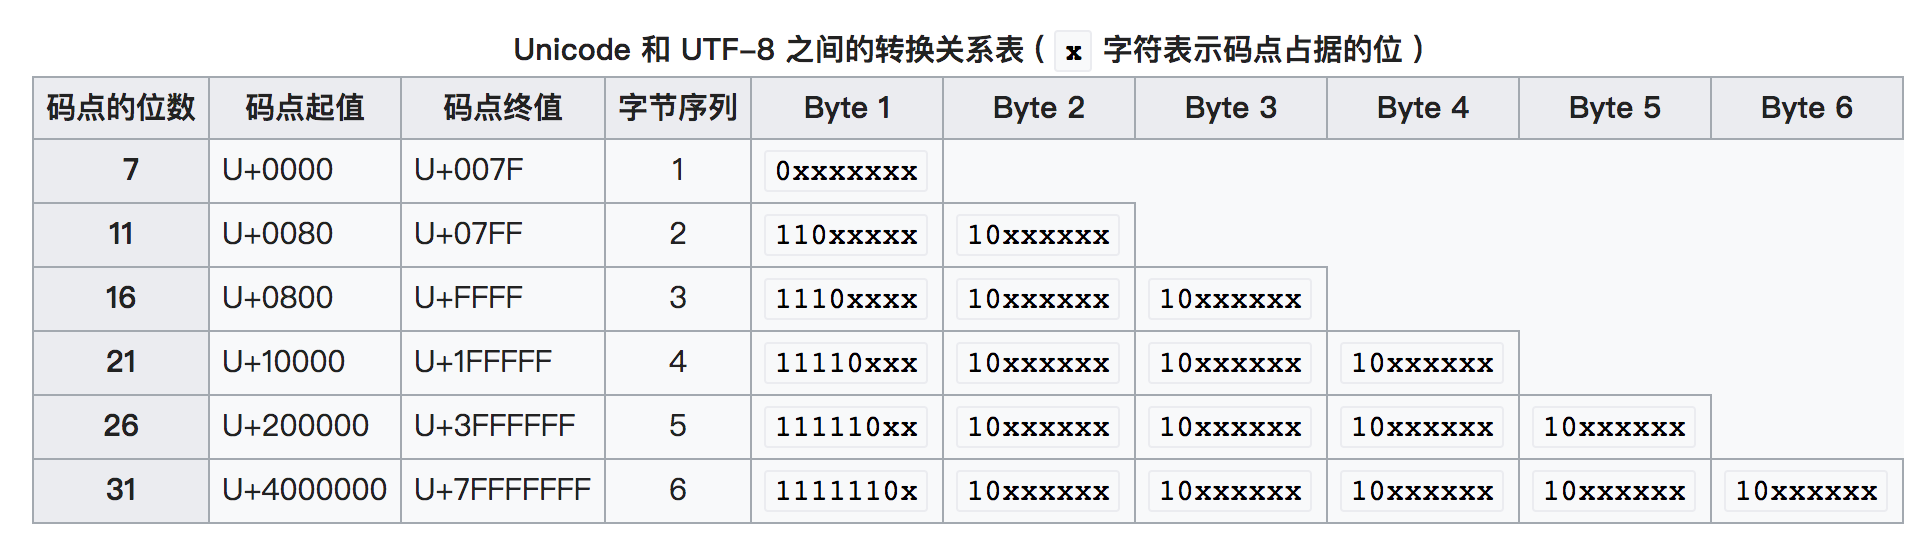 Unicode 和 UTF-8 之间的转换关系表（摘自维基百科）